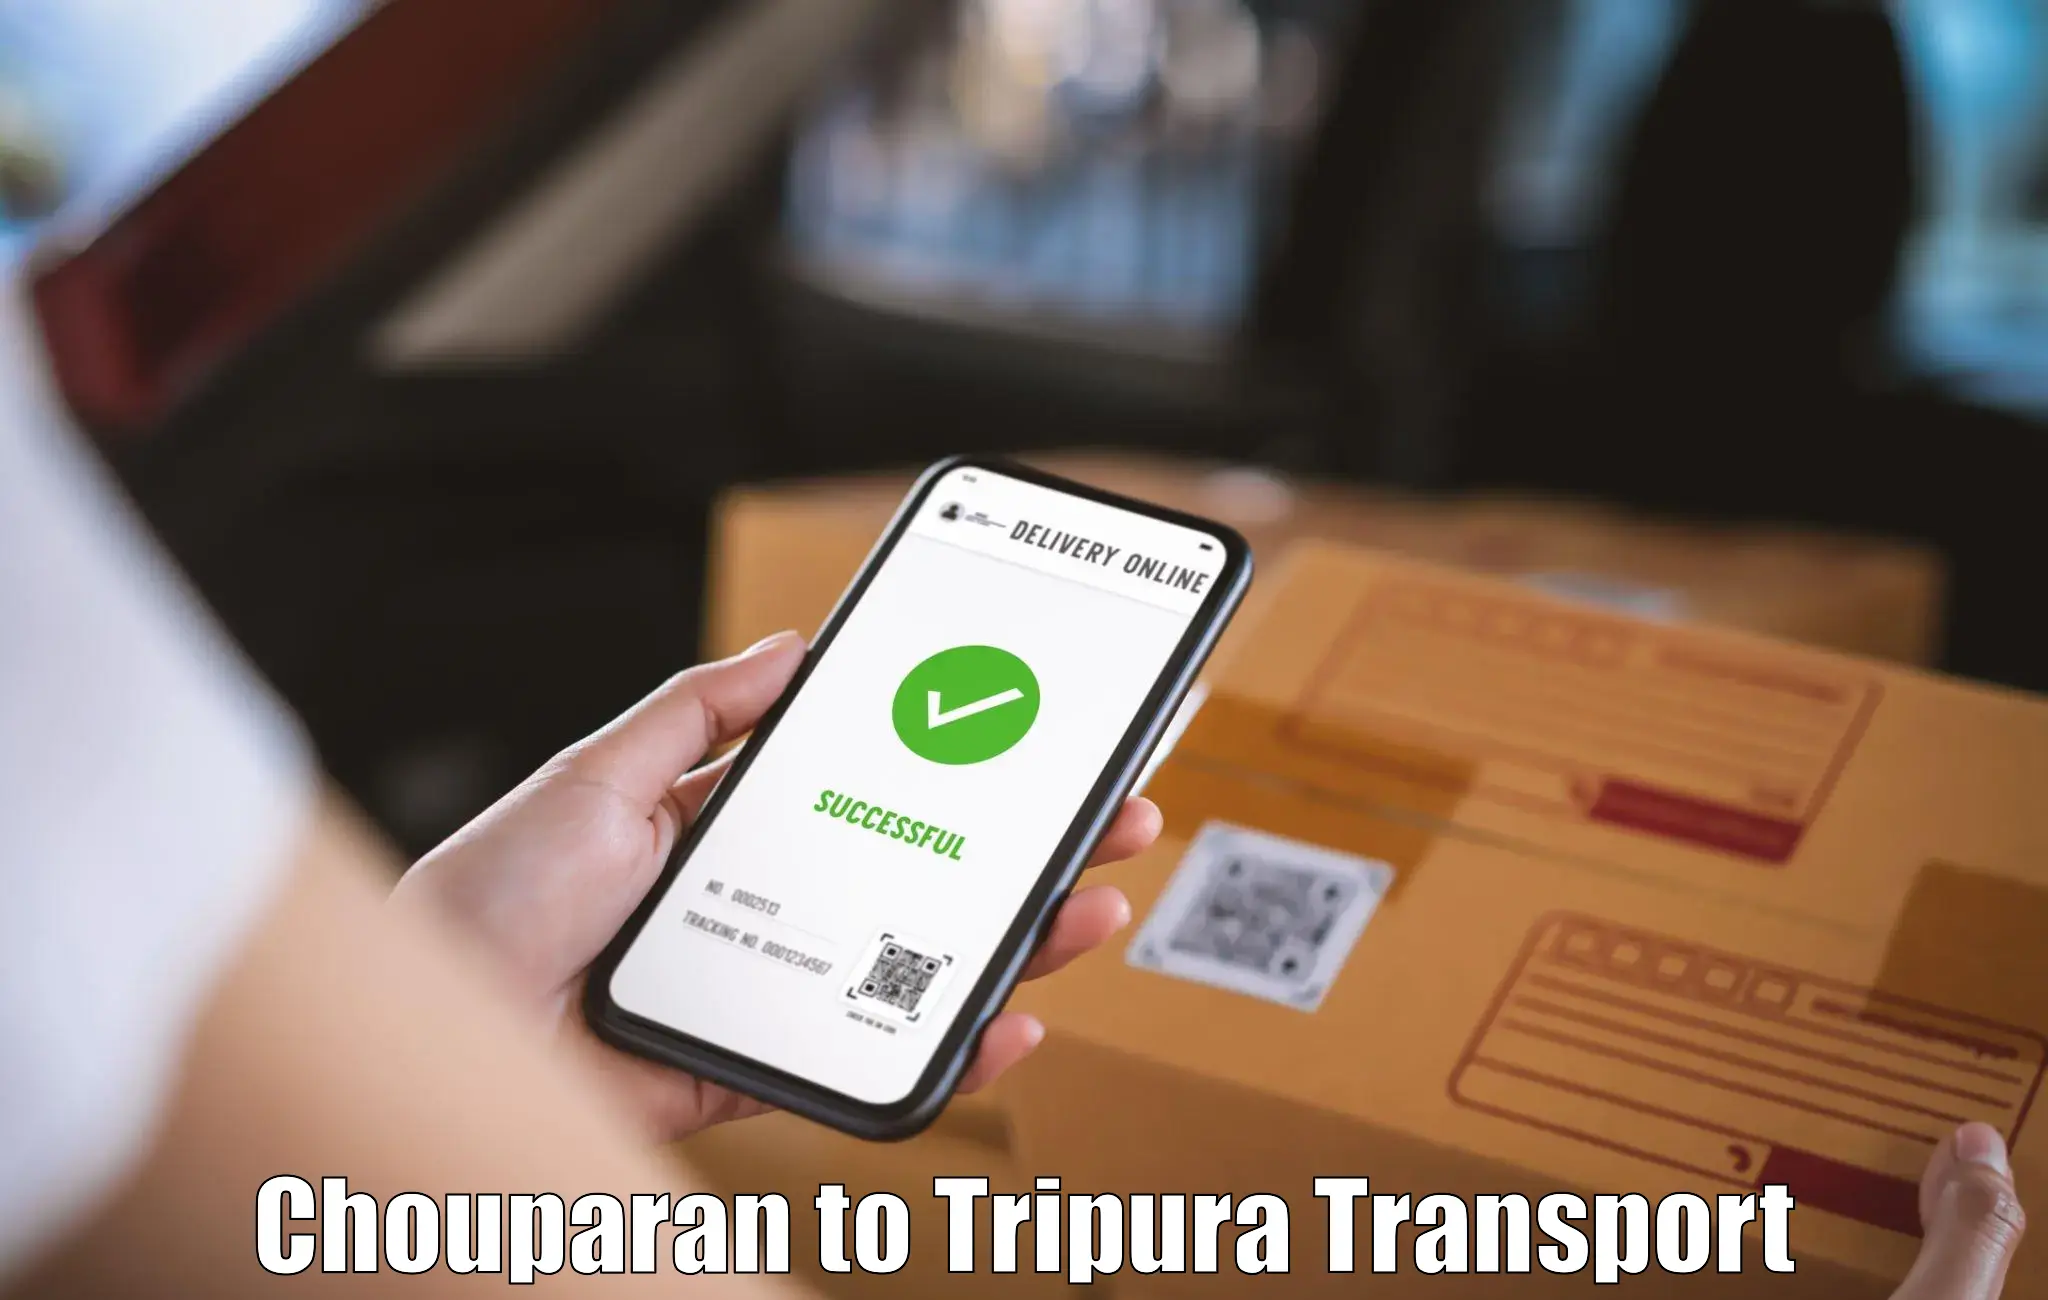 Logistics transportation services Chouparan to IIIT Agartala